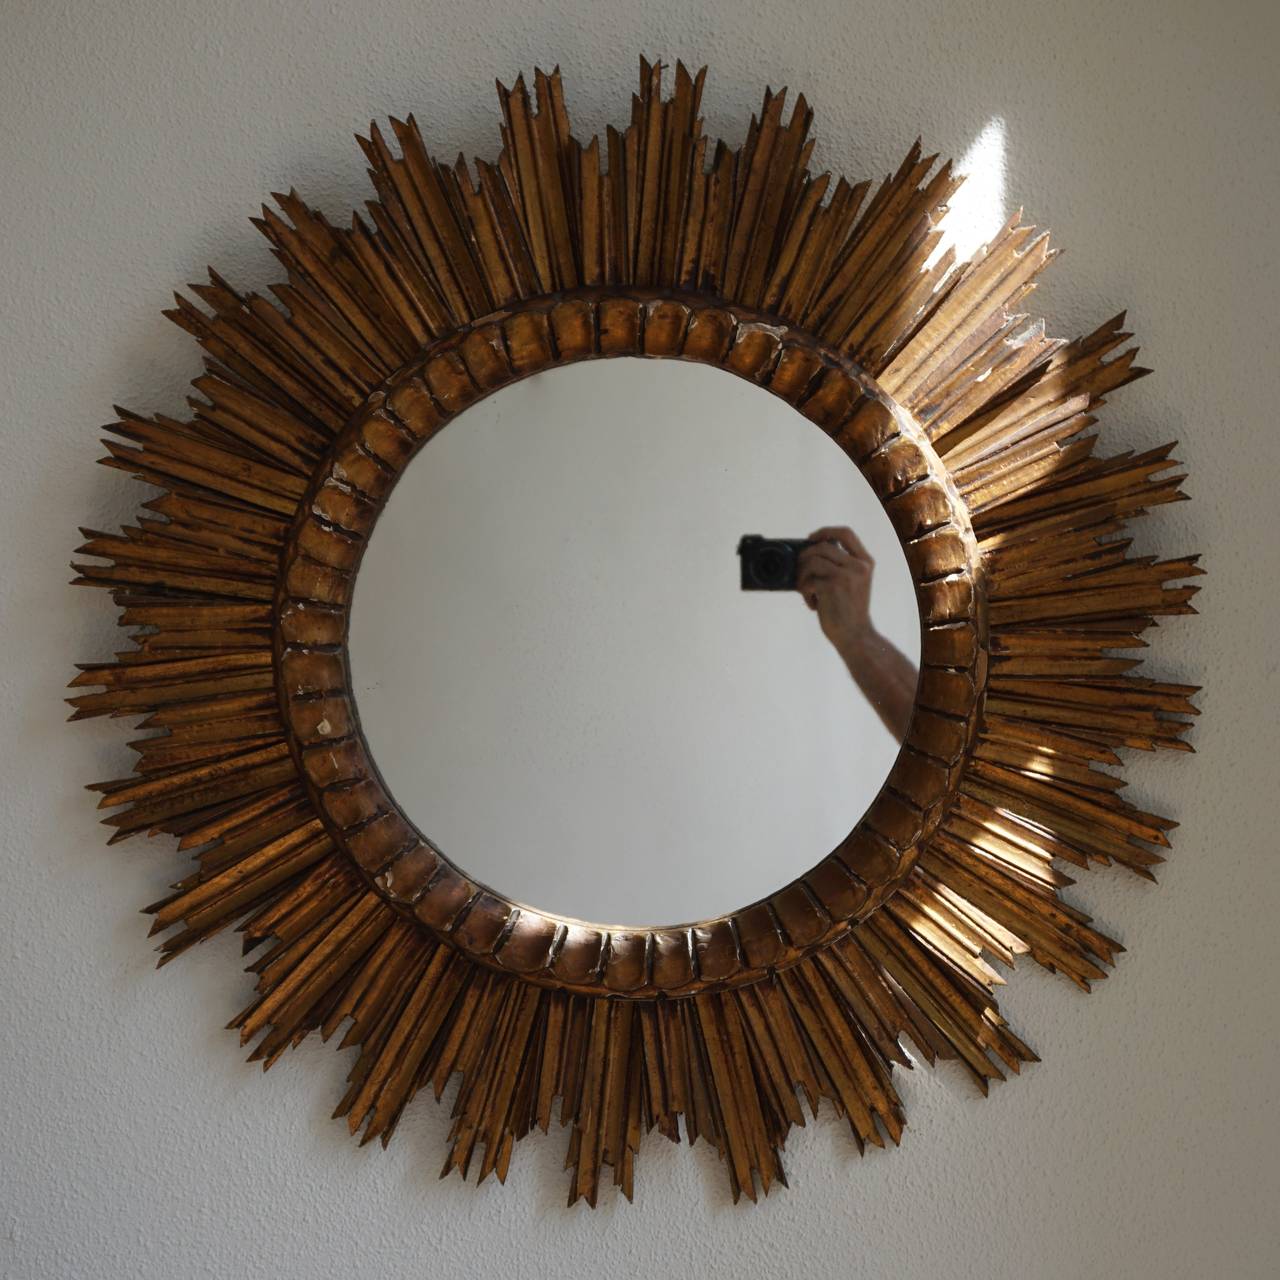 Italian giltwood wall mirror with convex inset mirror.
Diameter 73 cm.